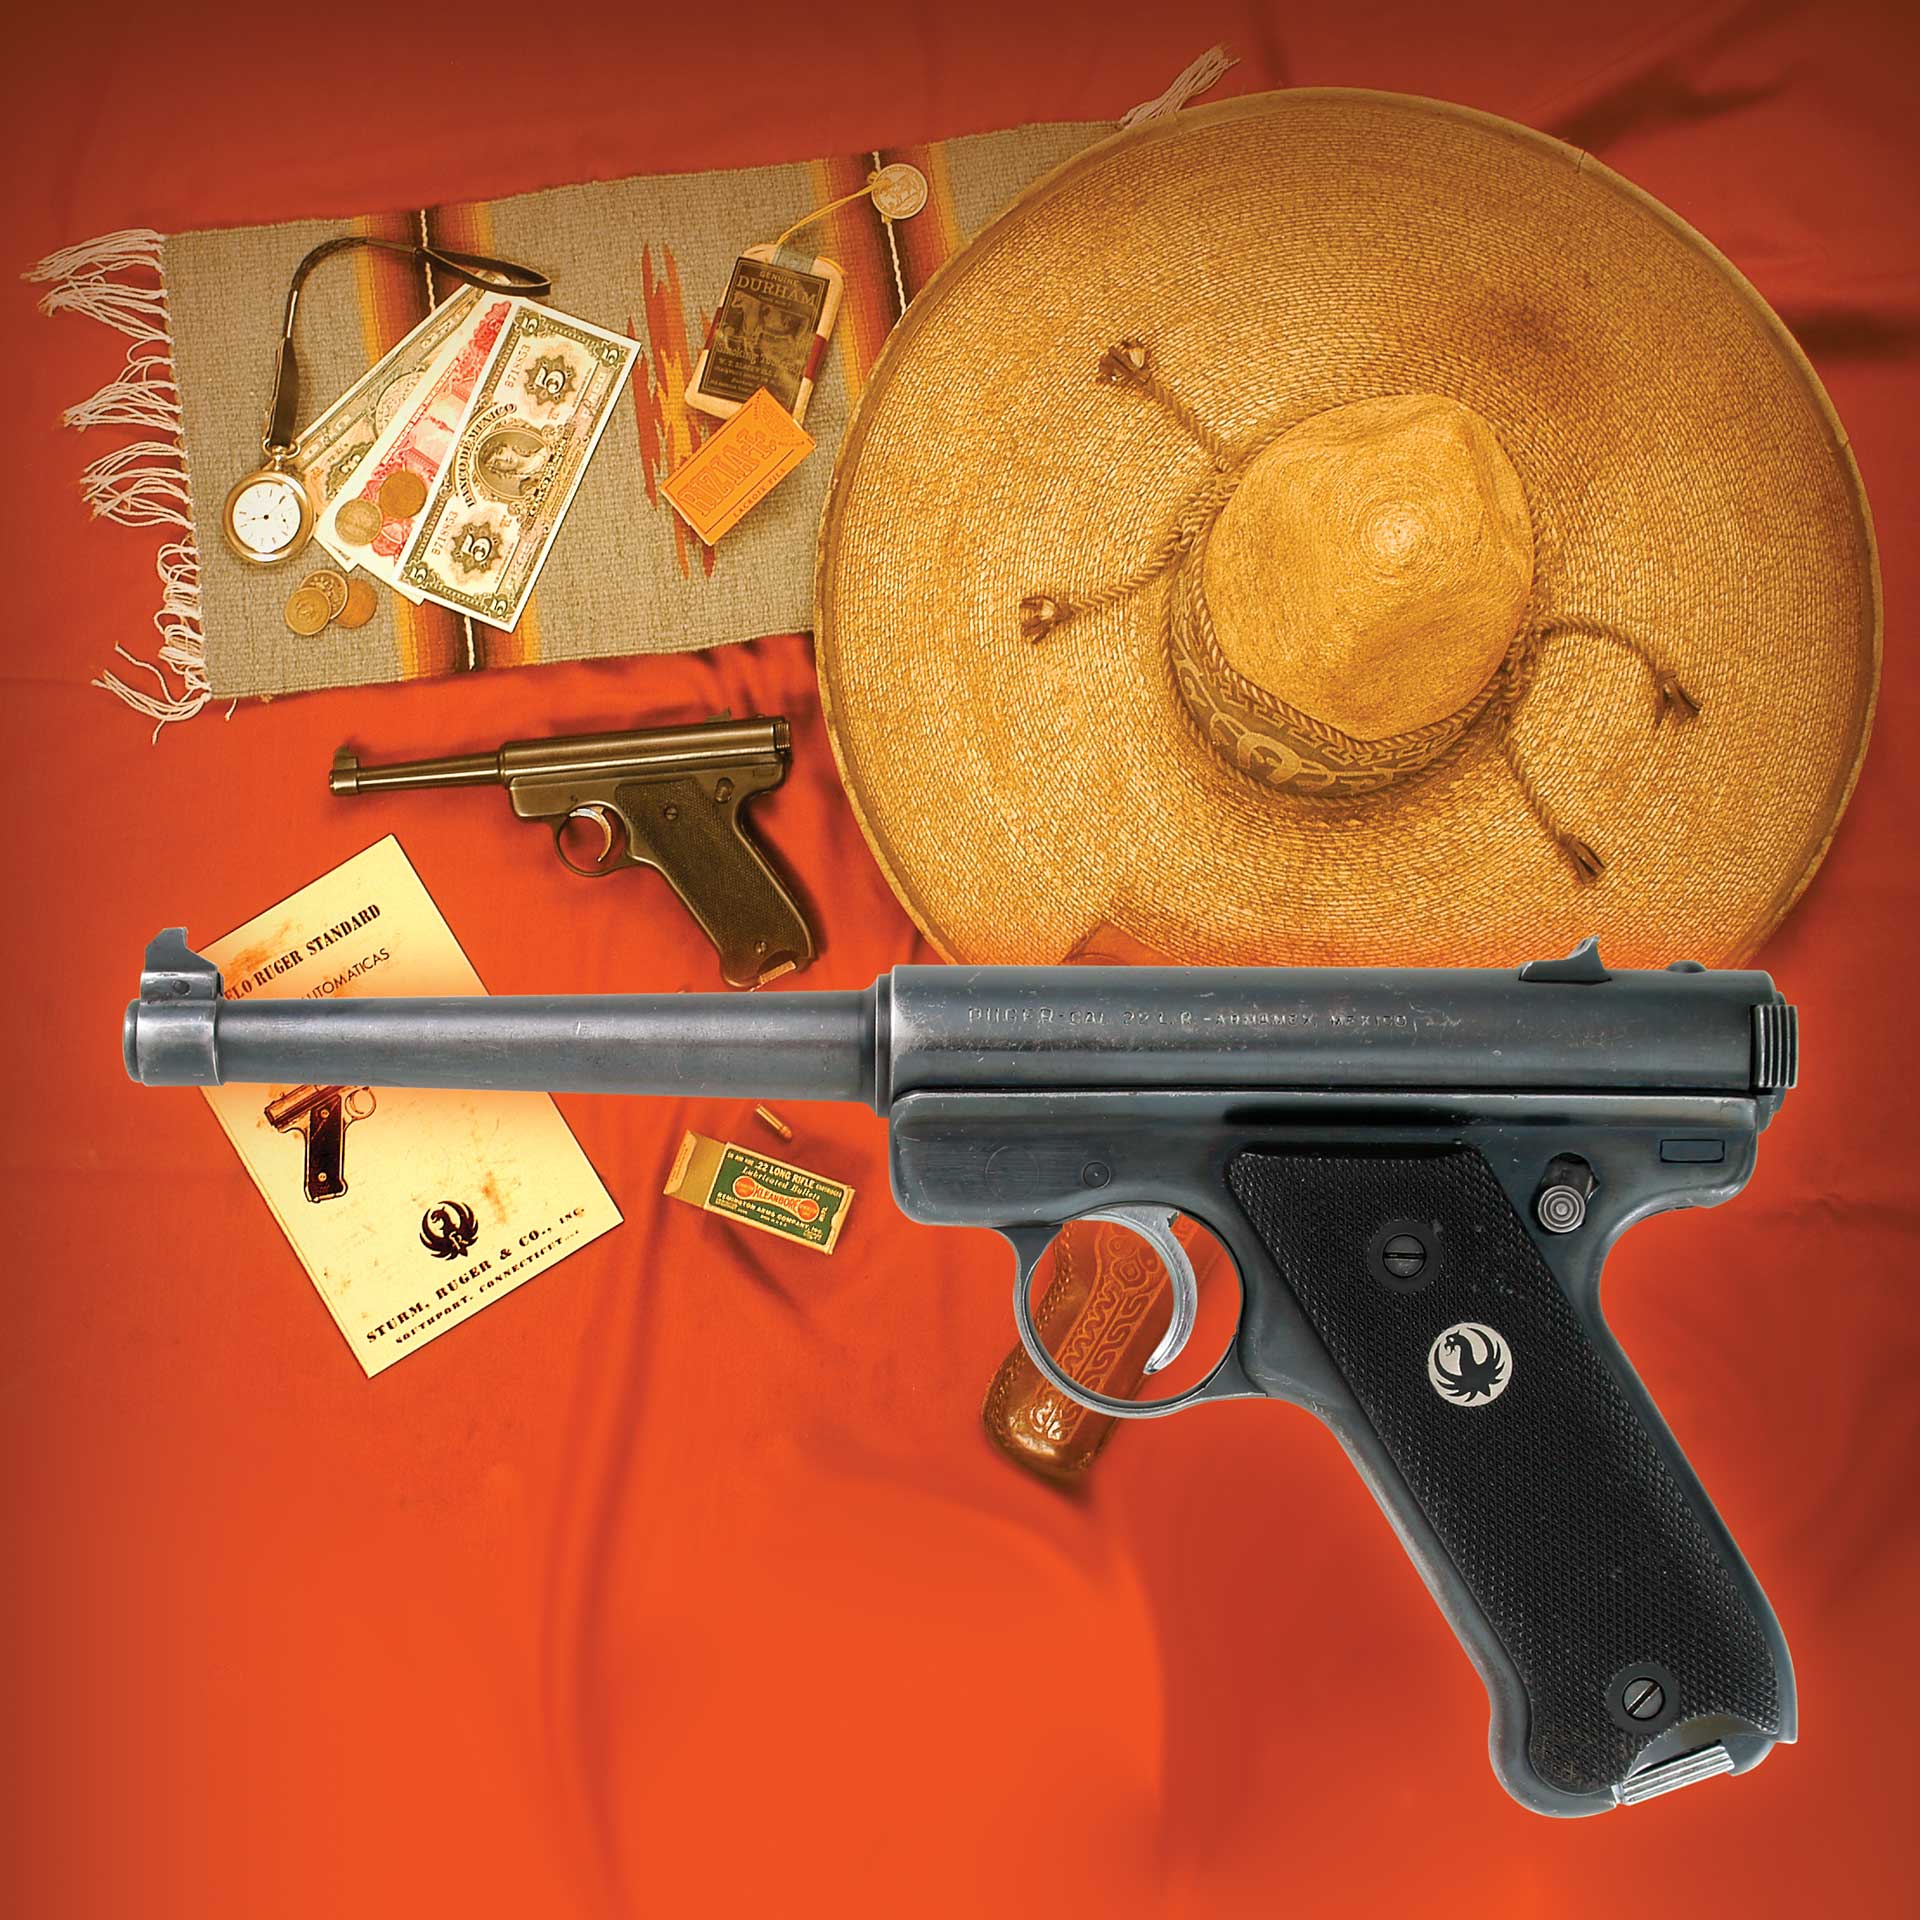 guns pistol hat money watch items red table